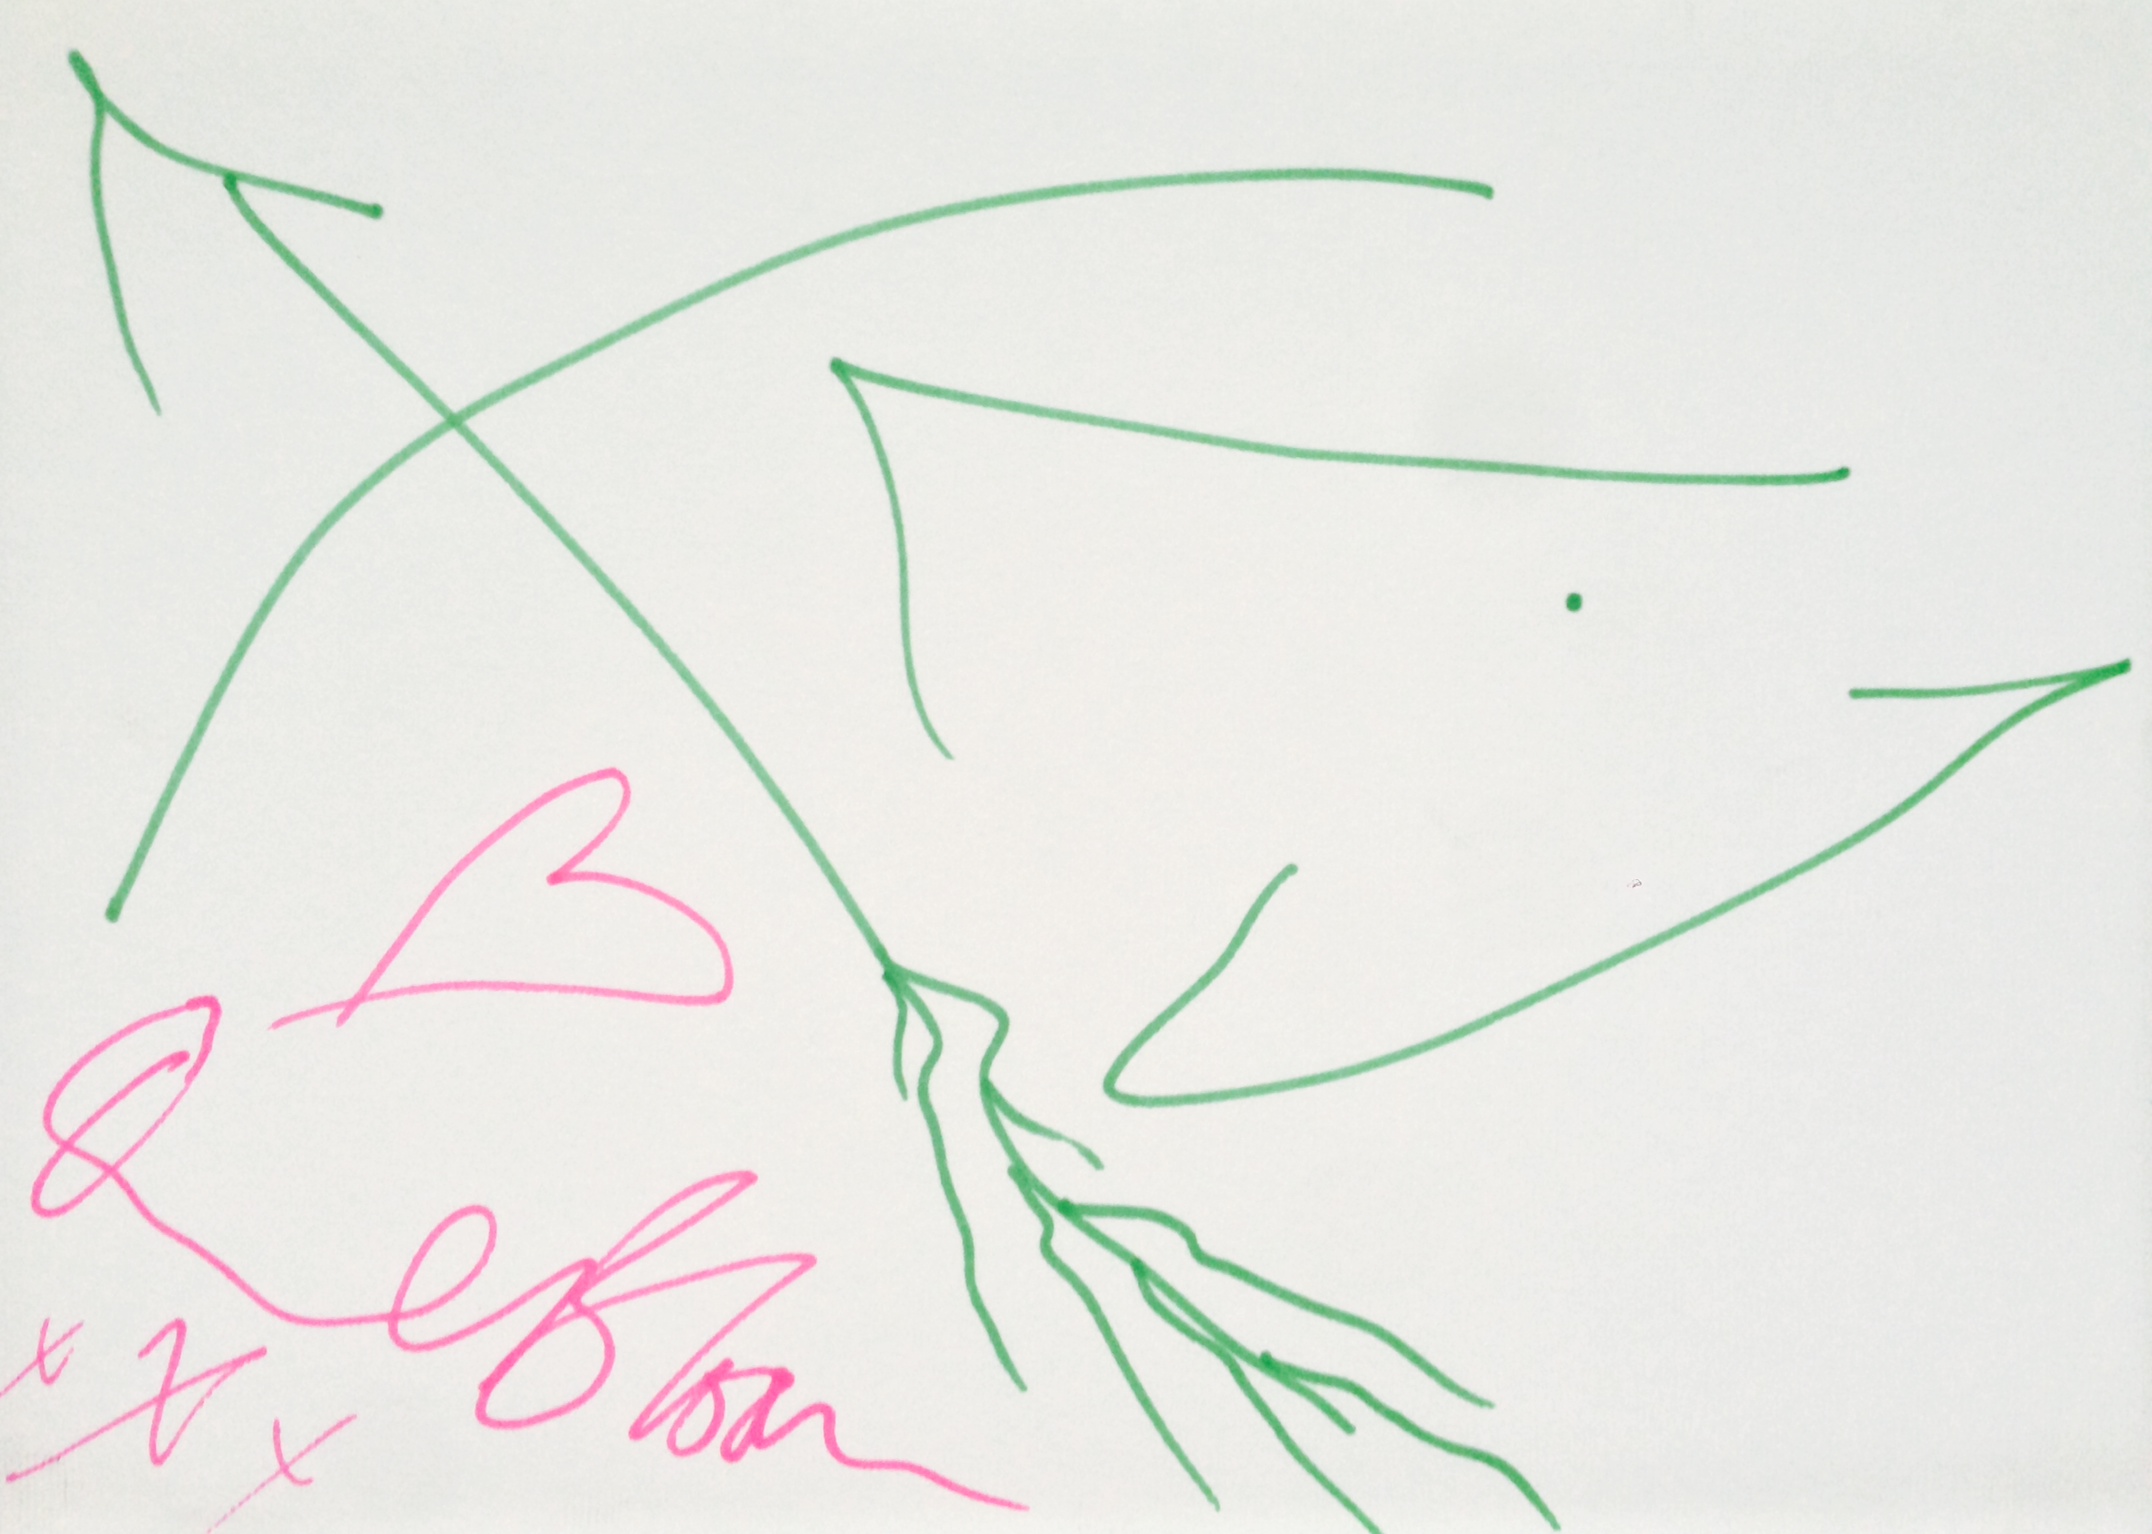 Orlando Bloom Hollywood Actor Untitled,signed. coloured felt pen on paper, 25 x 17.5cm